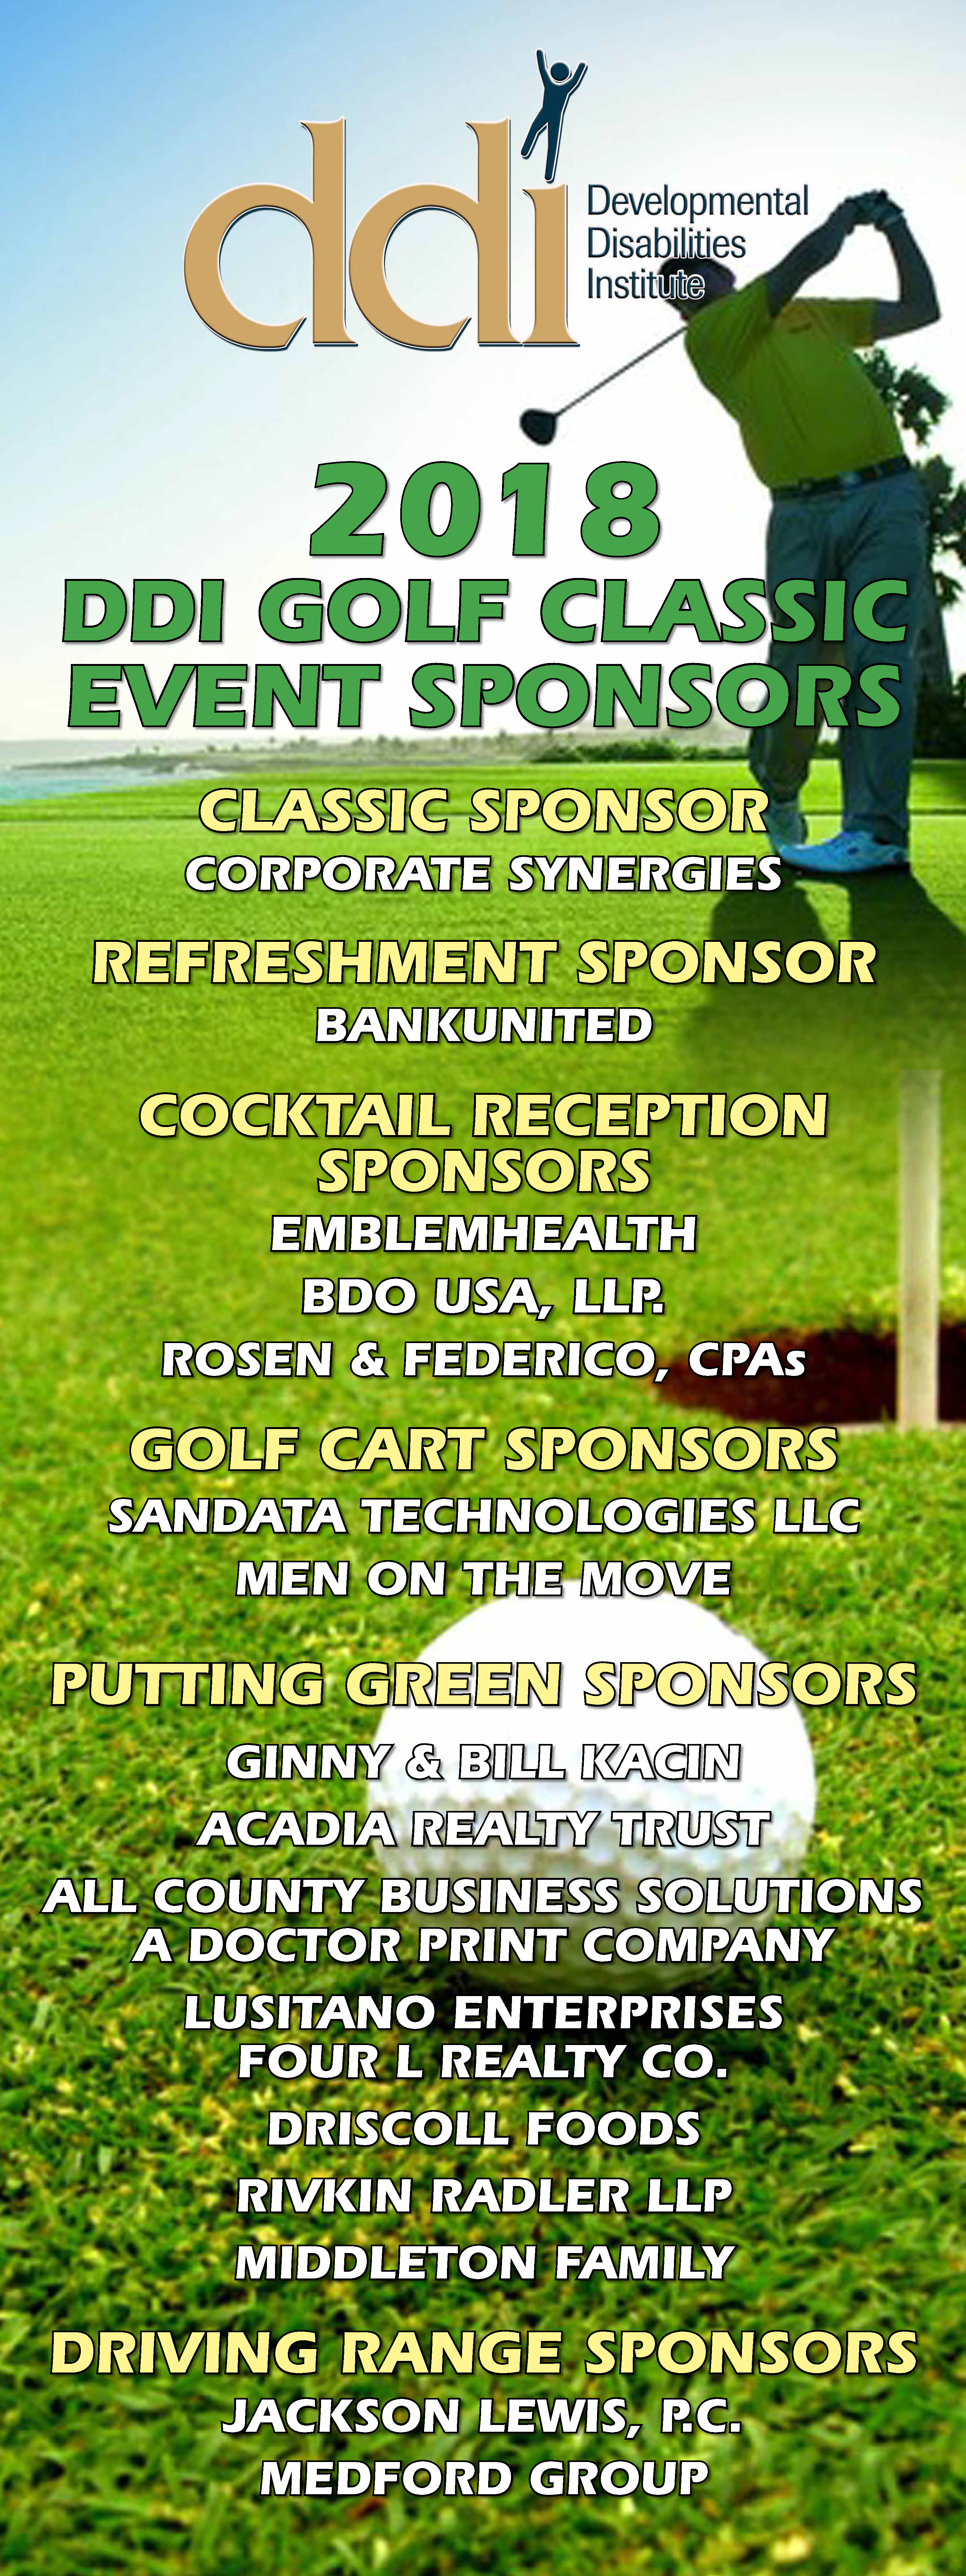 DDI Golf Classic sponsors